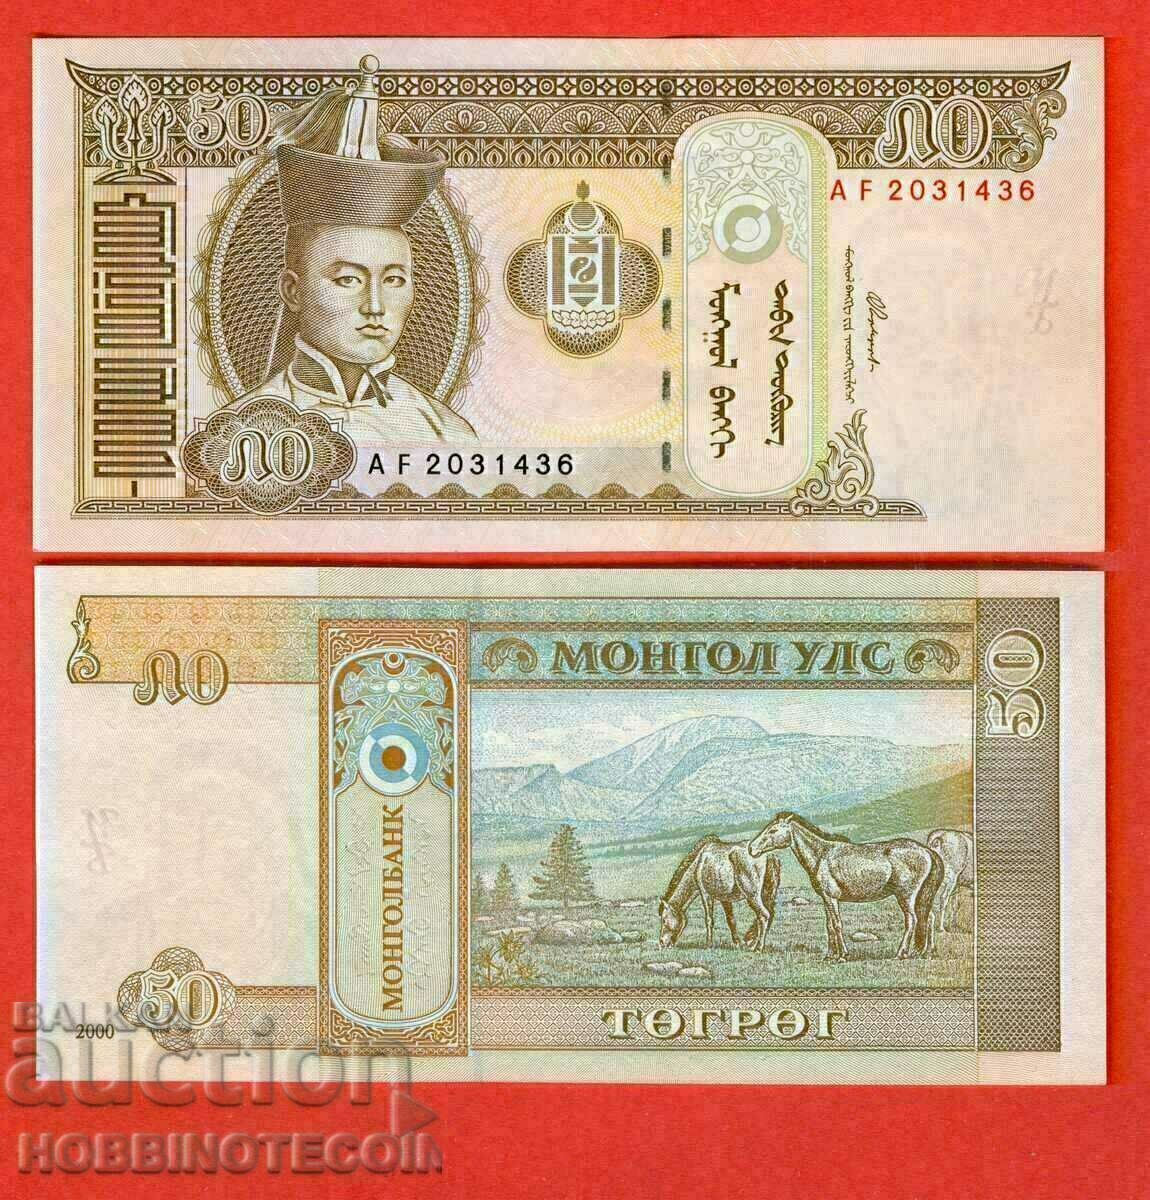 MONGOLIA MONGOLIA 50 Tugrik issue issue 2000 NEW UNC